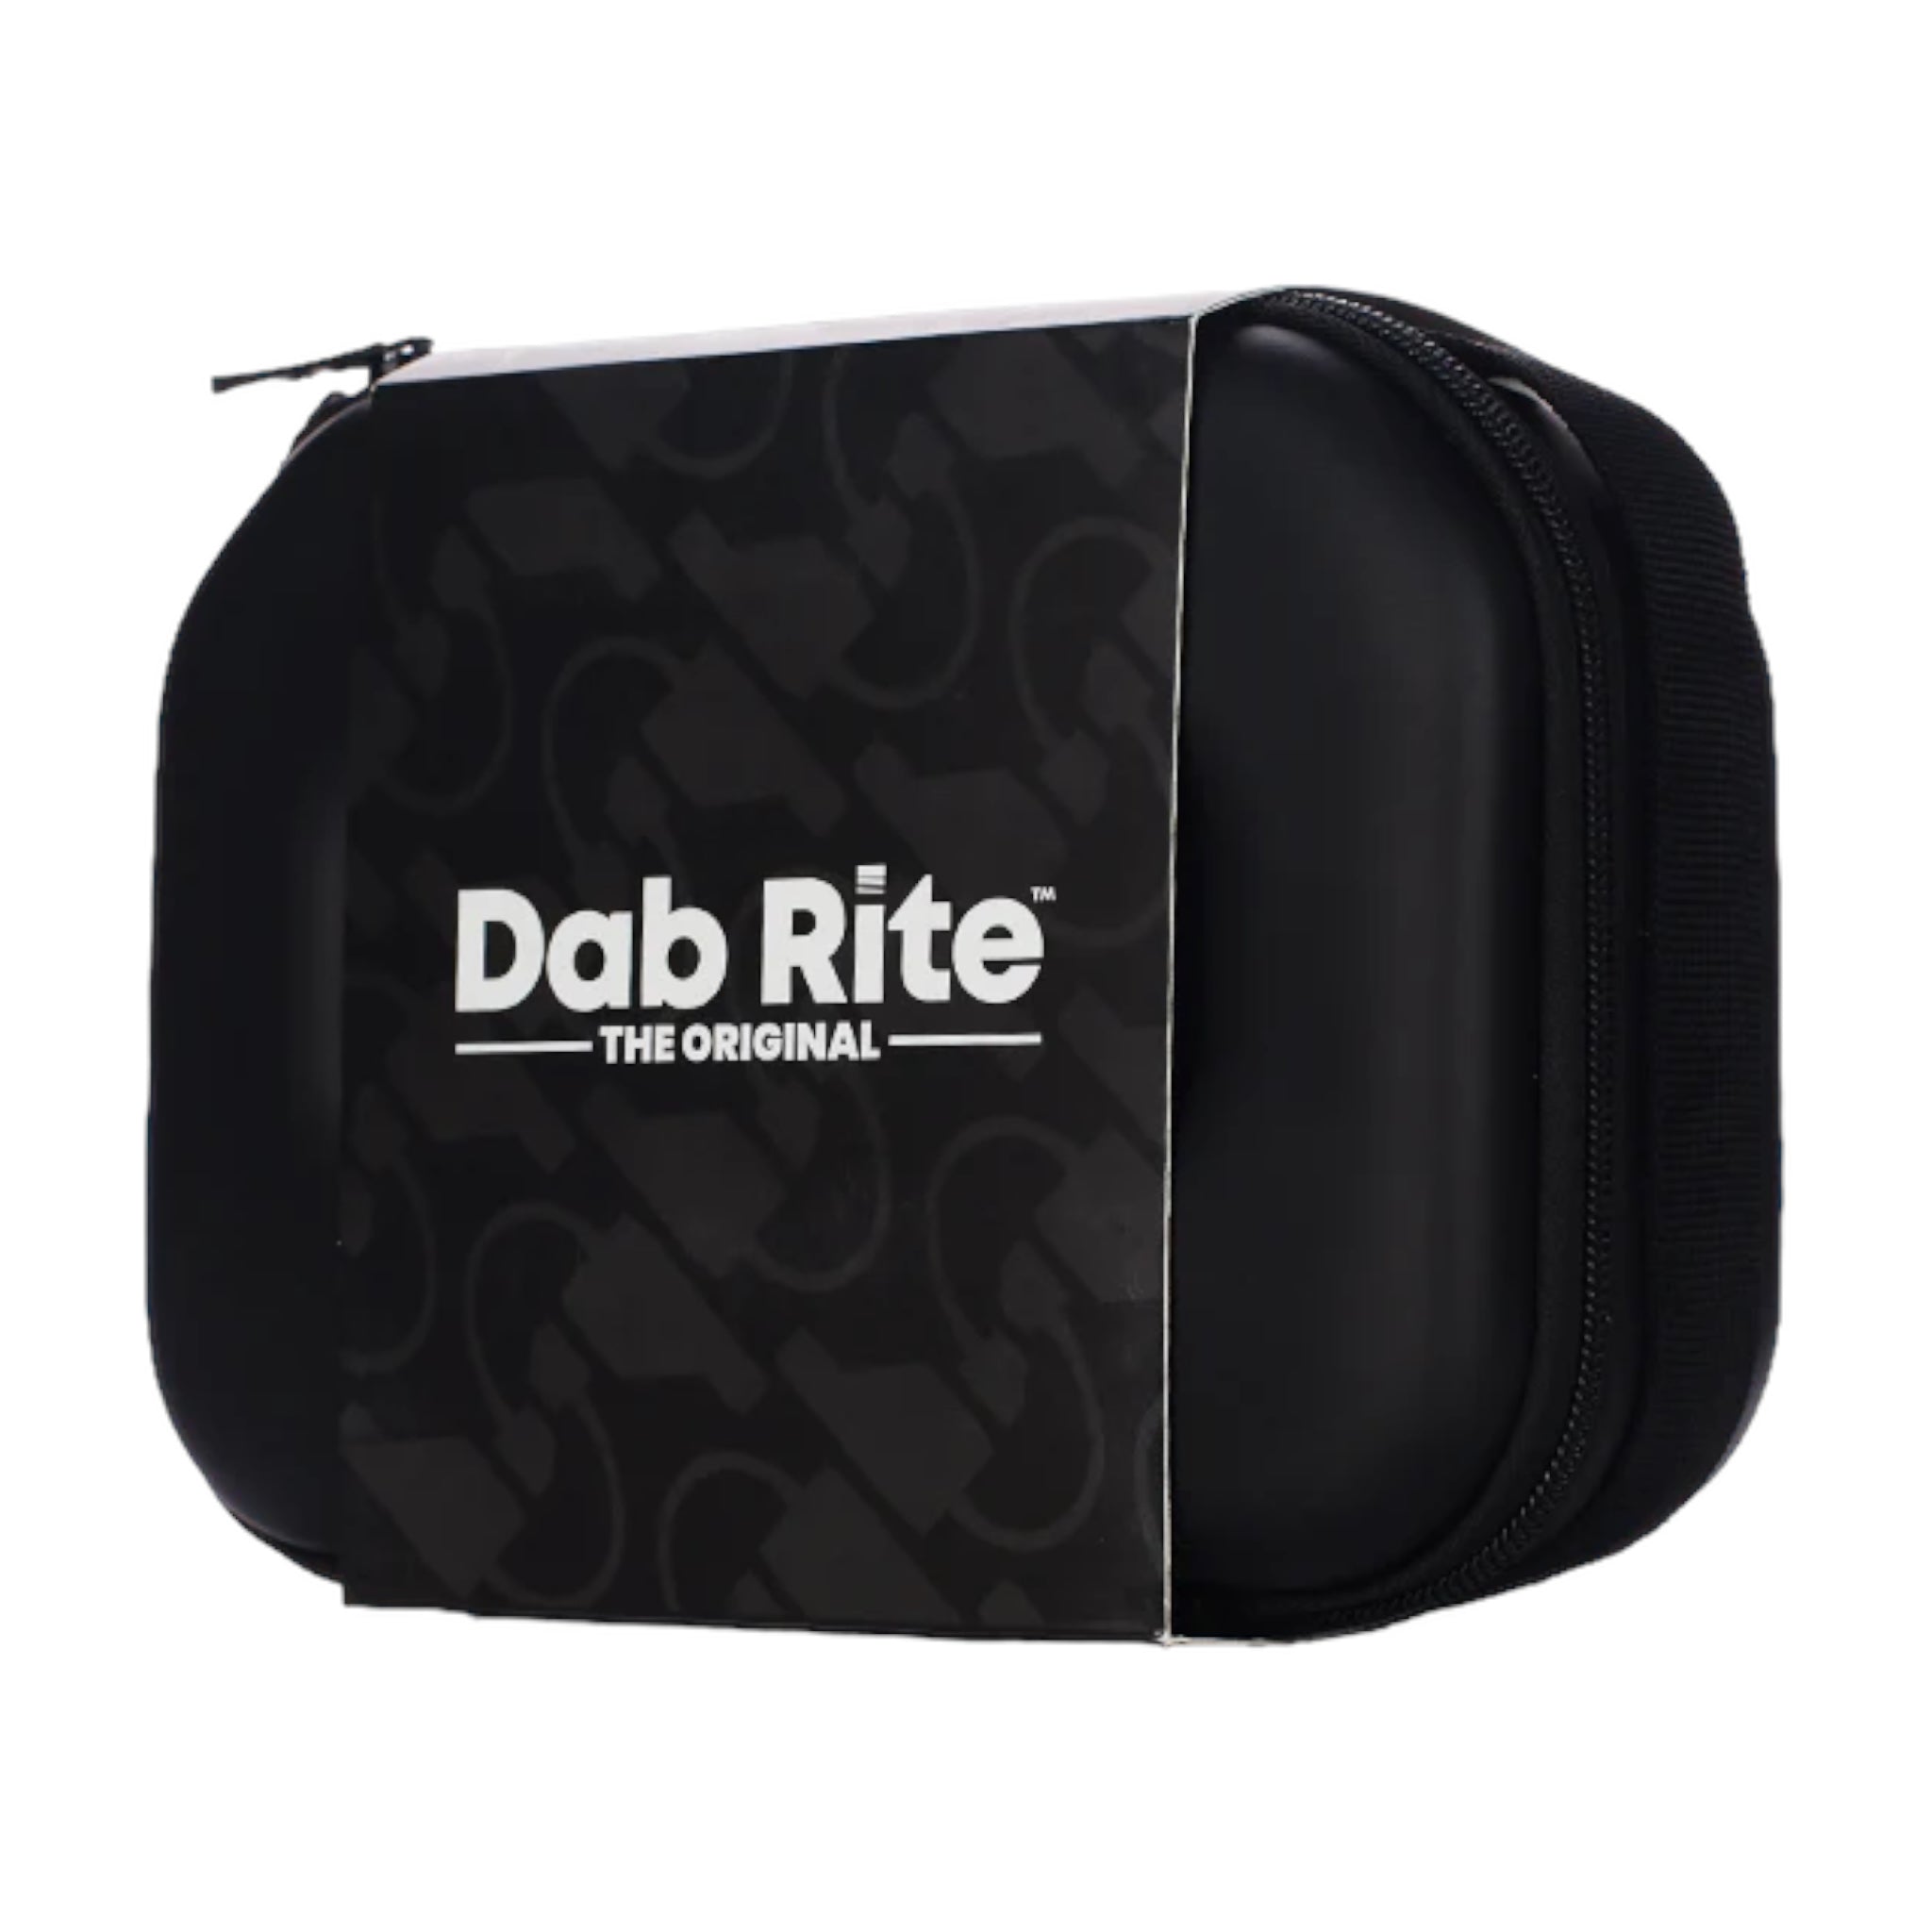 Dab Rite - The Original - Digital Thermometer For Dabbing